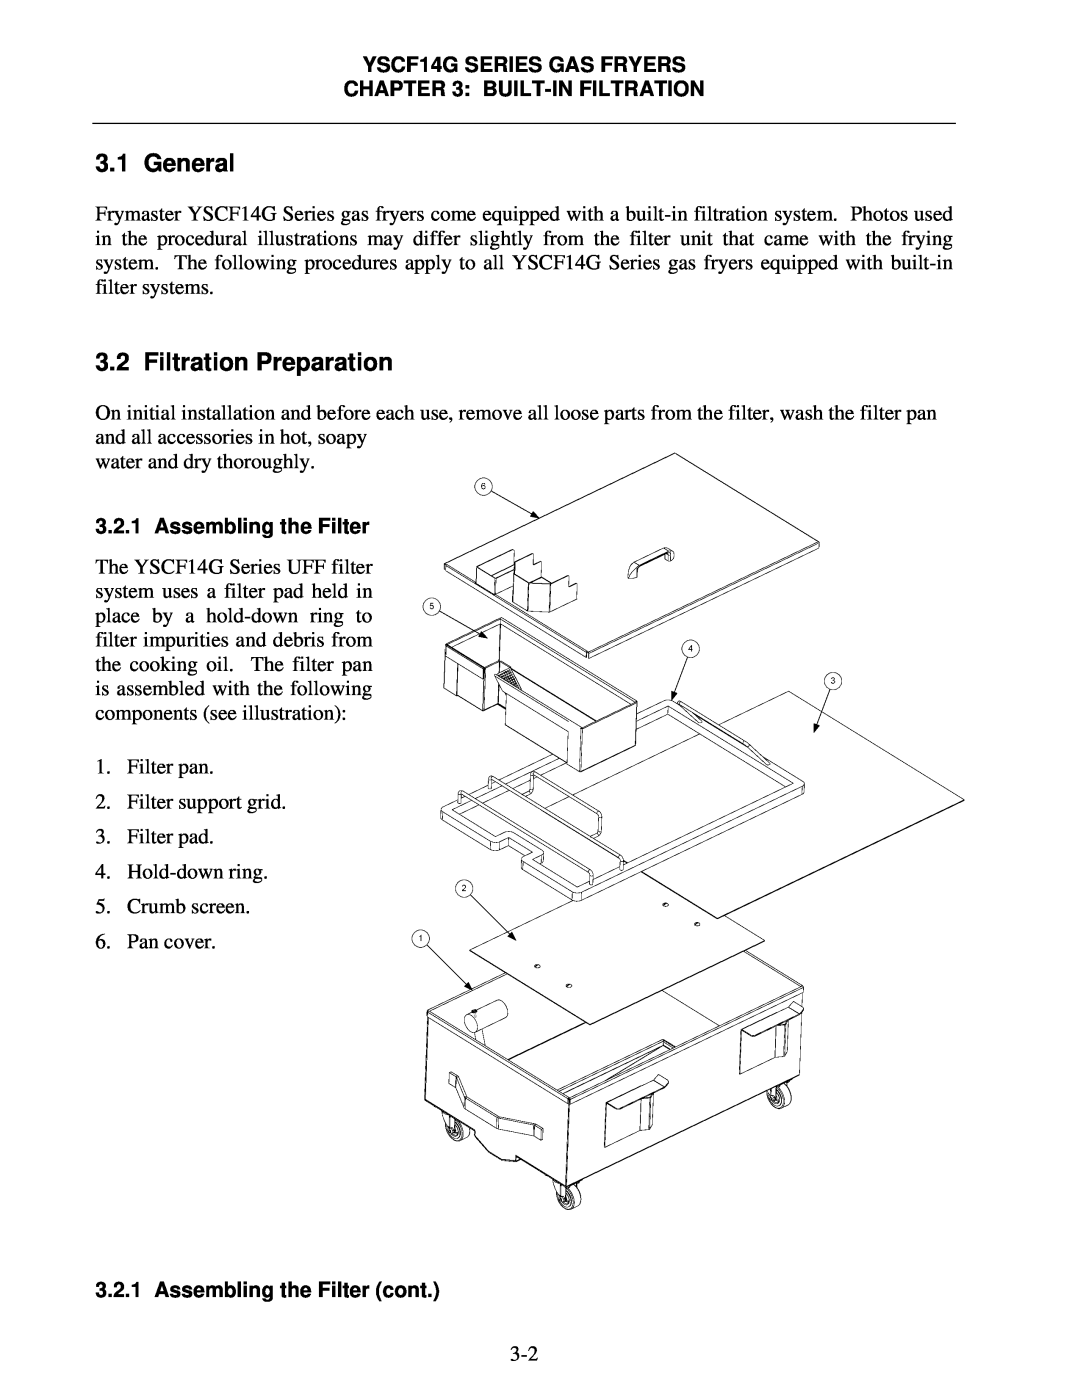 Frymaster YSCF14G operation manual General, Filtration Preparation 